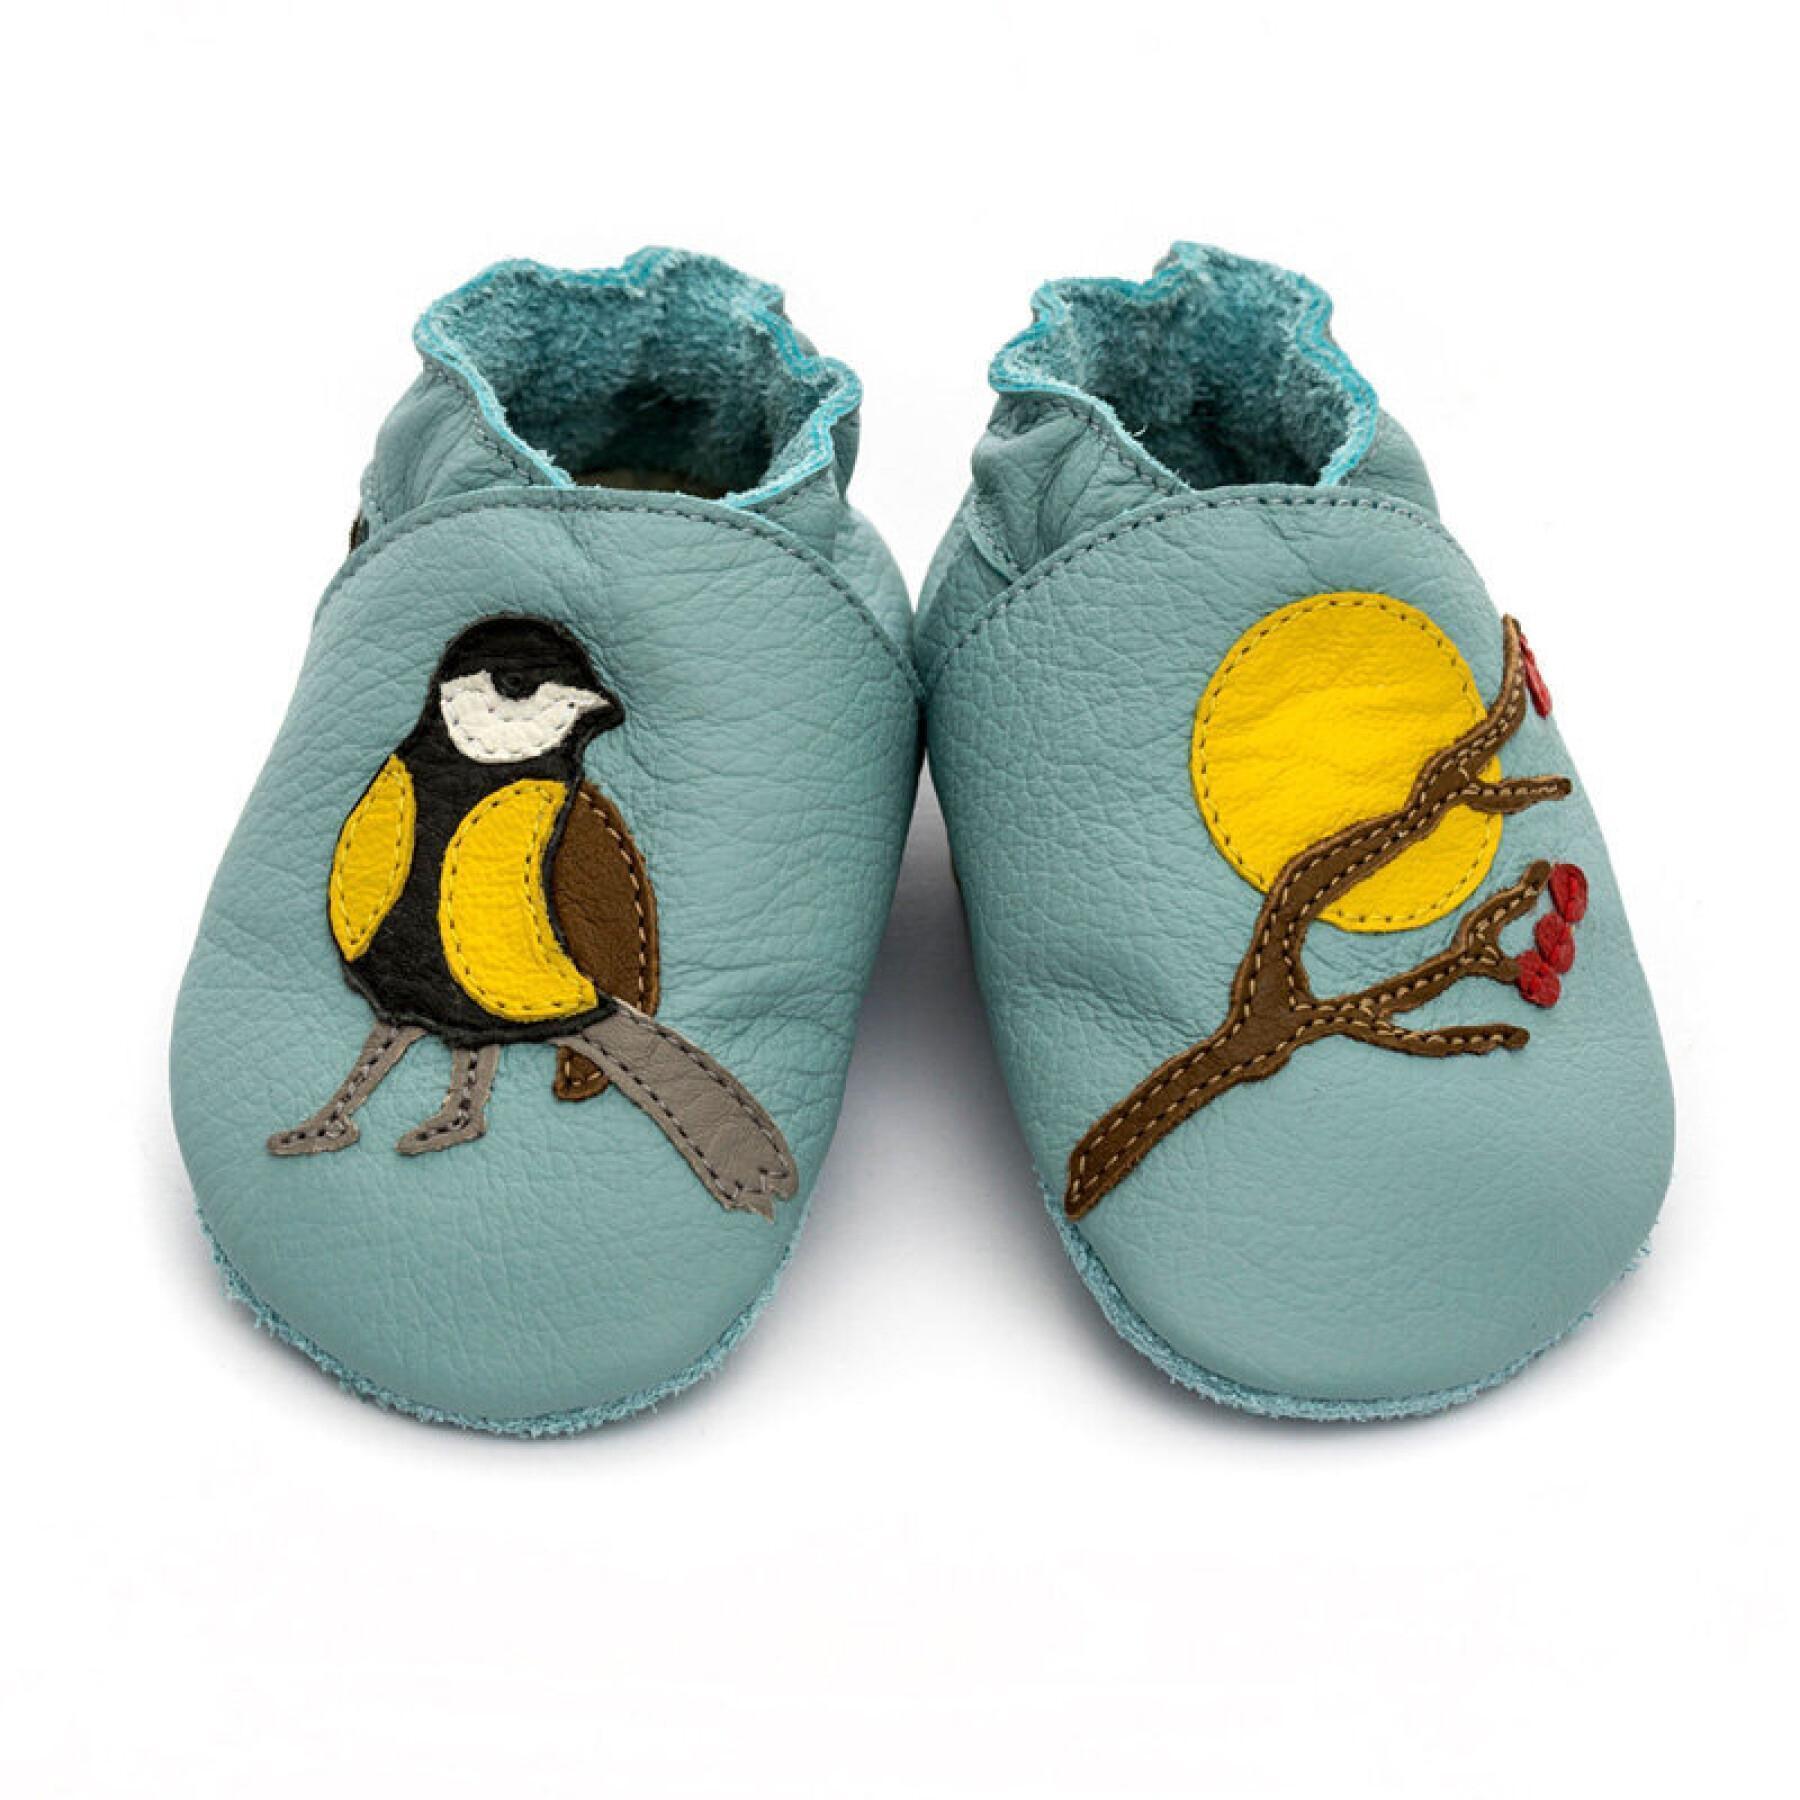 Soft baby boy slippers Liliputi Chirp